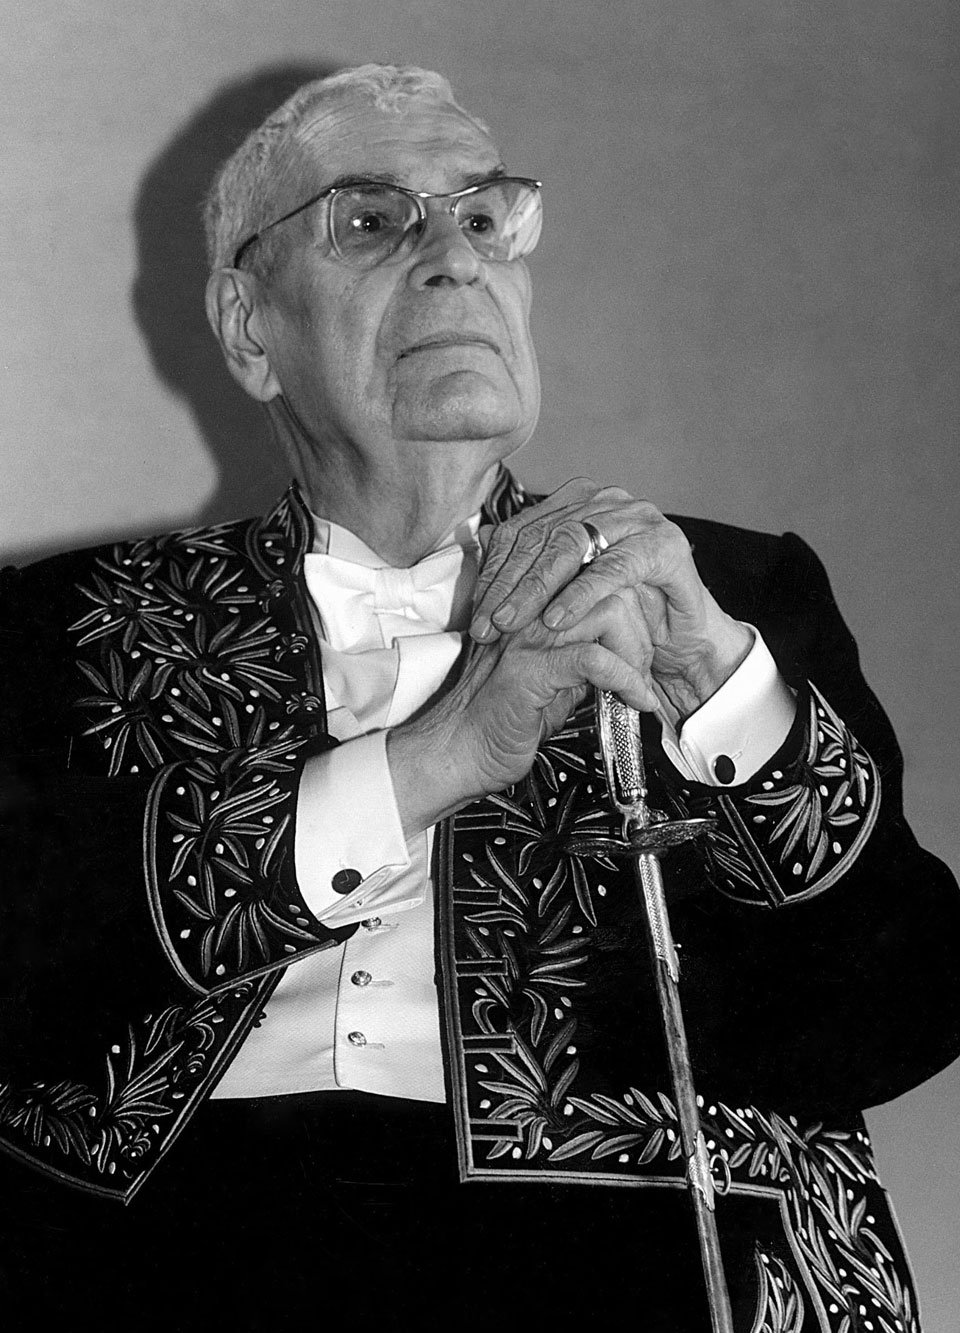 Federico Zeri